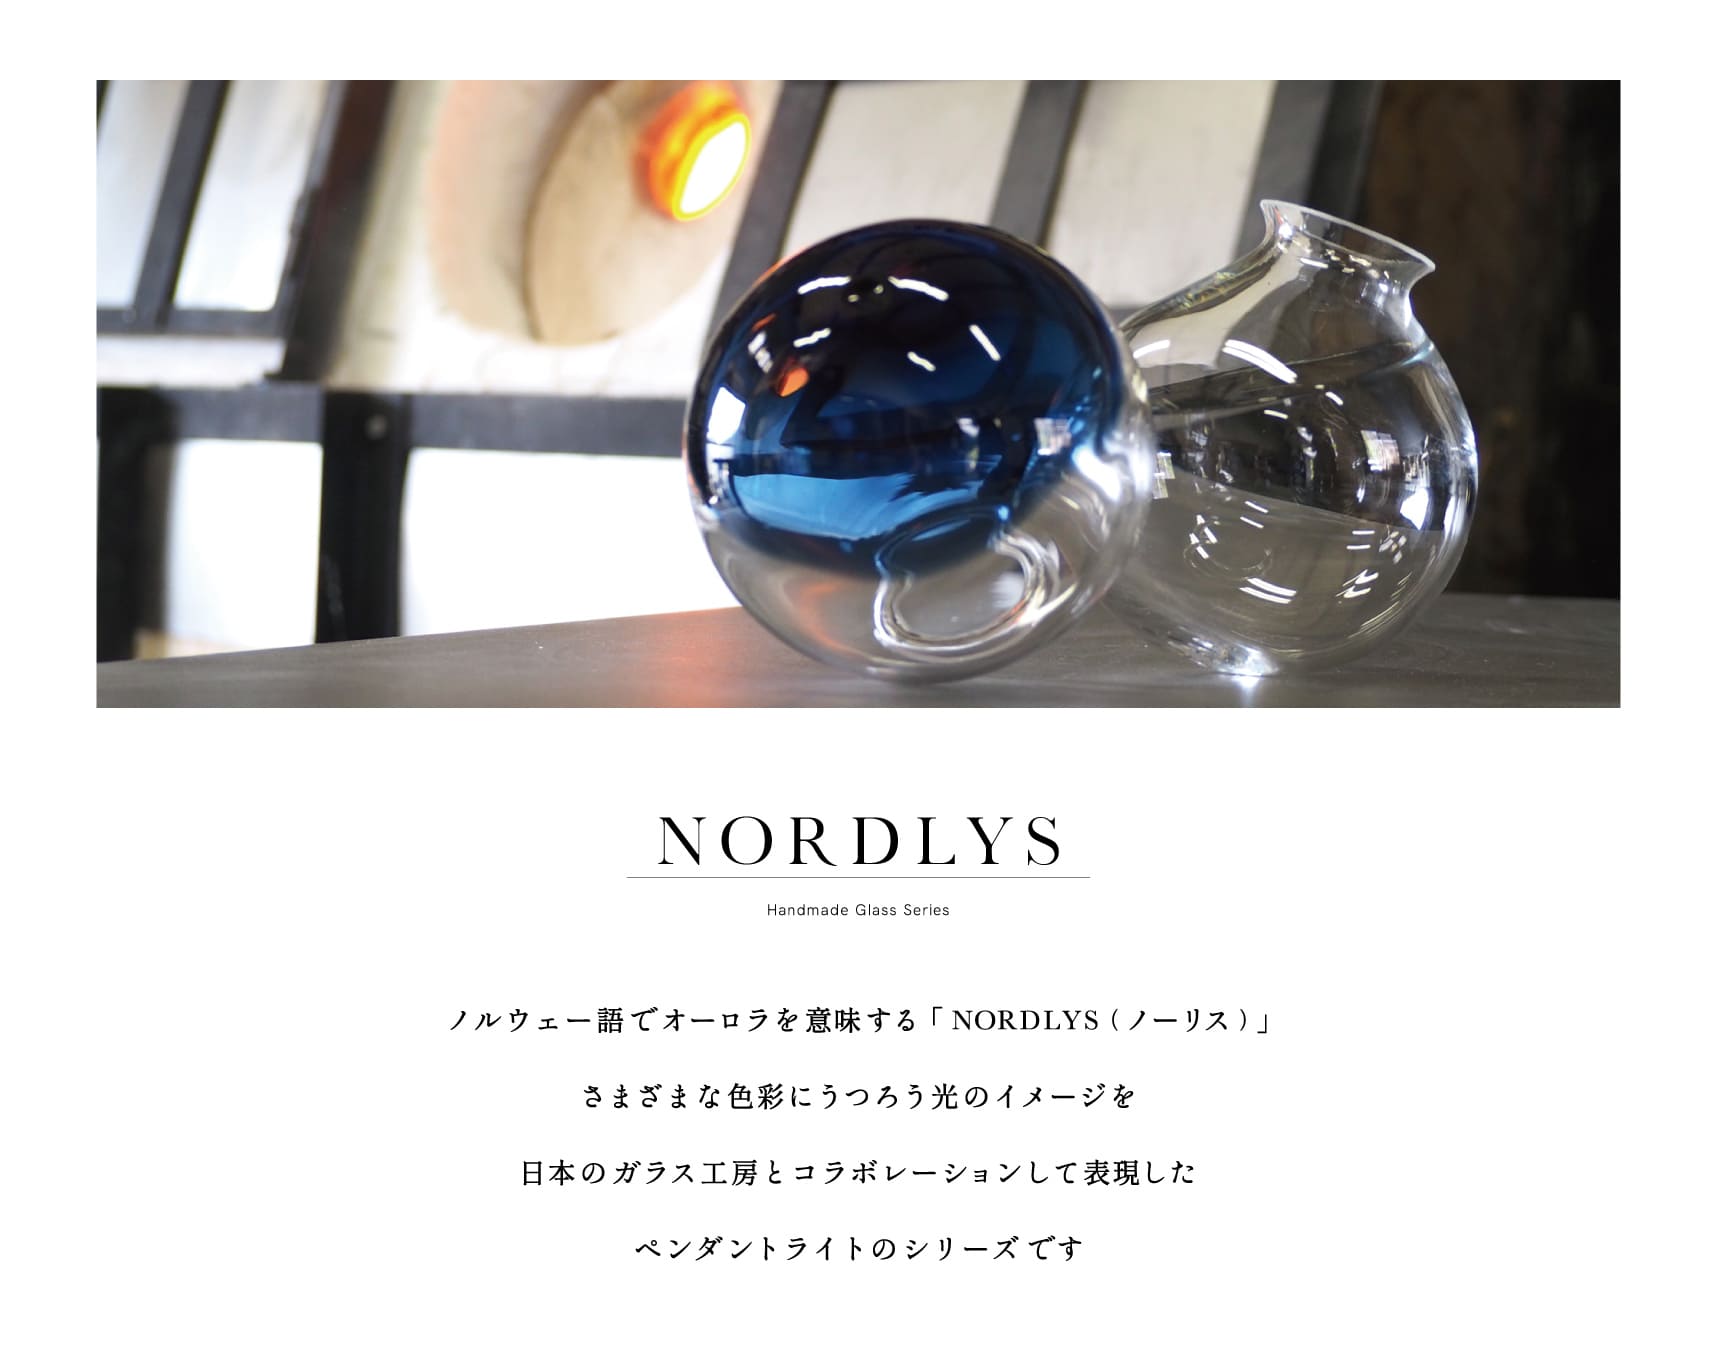 Nordlys Series